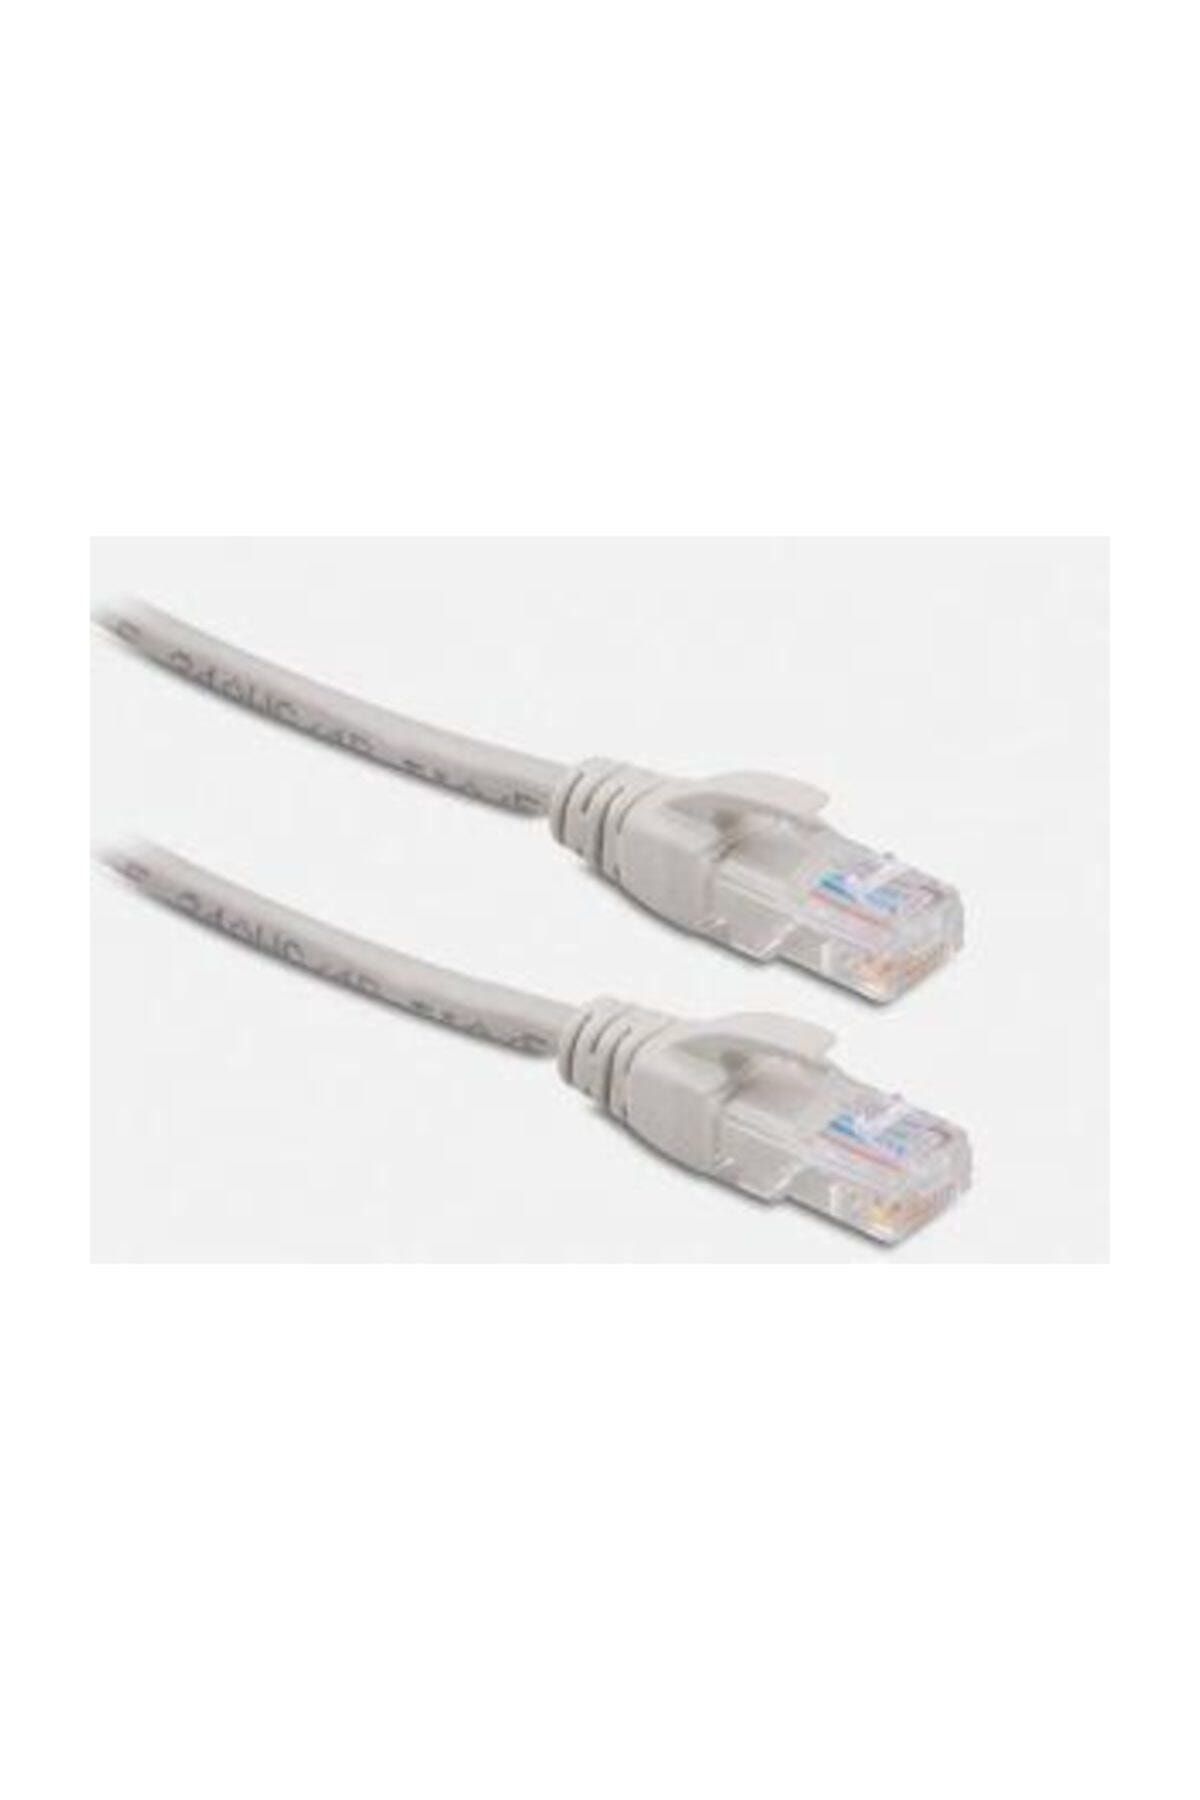 HADRON Hd4073 1.5 Metre Ethernet Kablosu